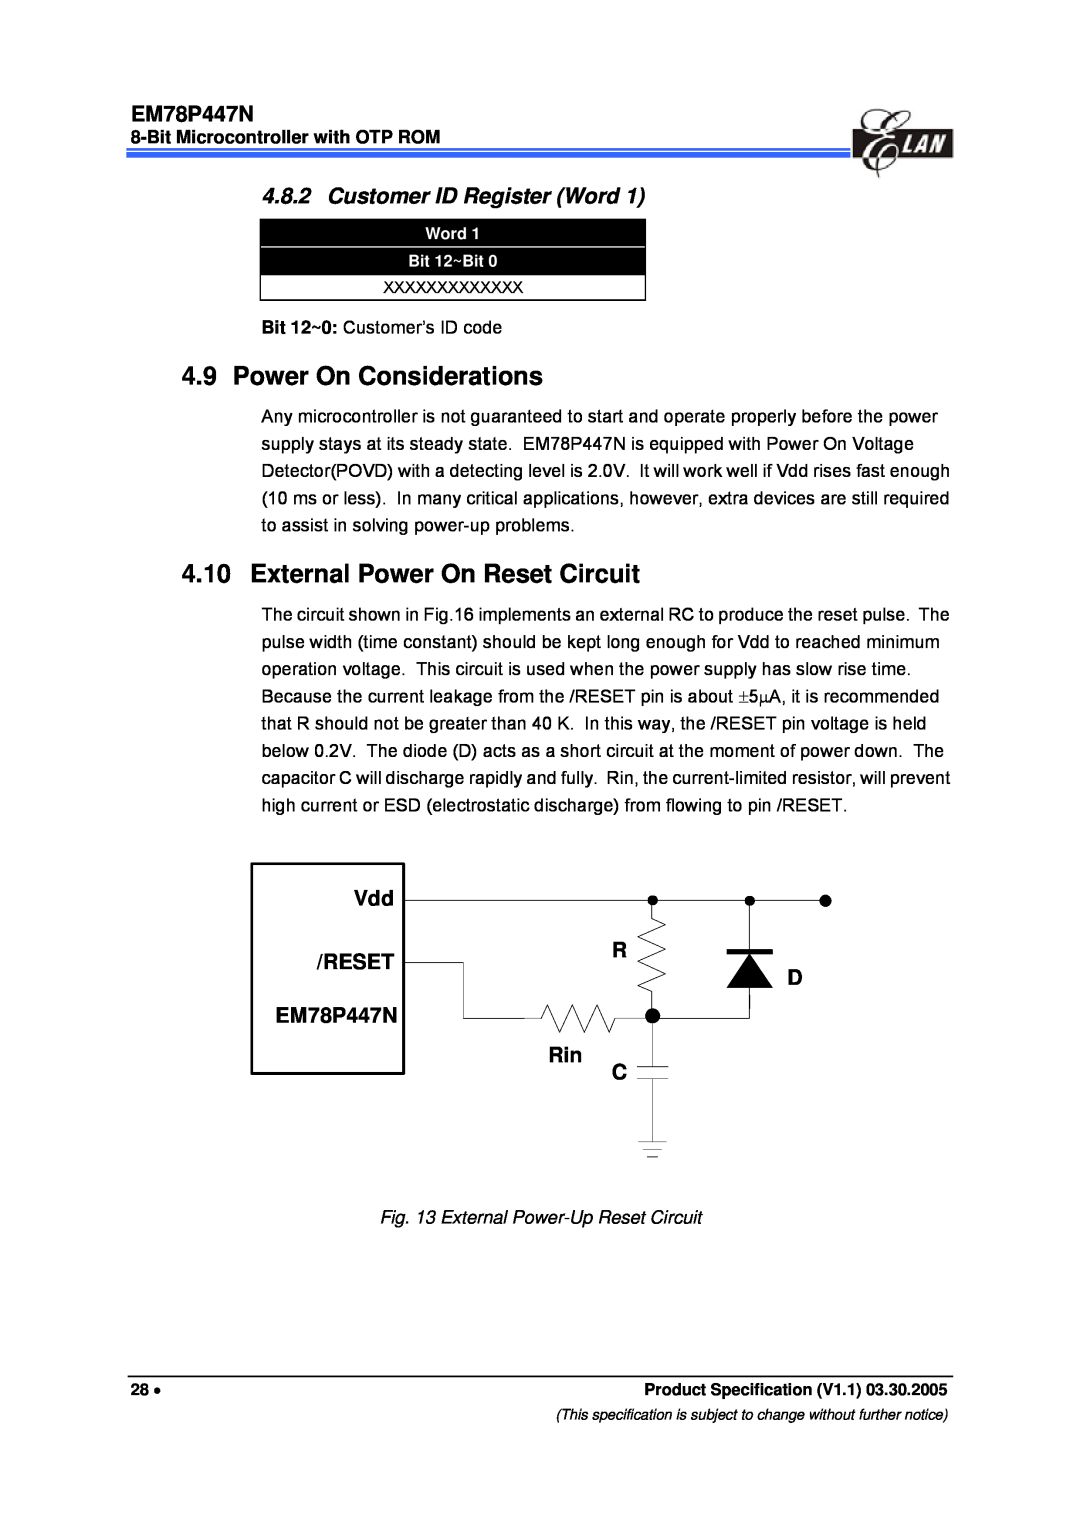 IBM EM78P447N manual Power On Considerations, External Power On Reset Circuit, Customer ID Register Word 